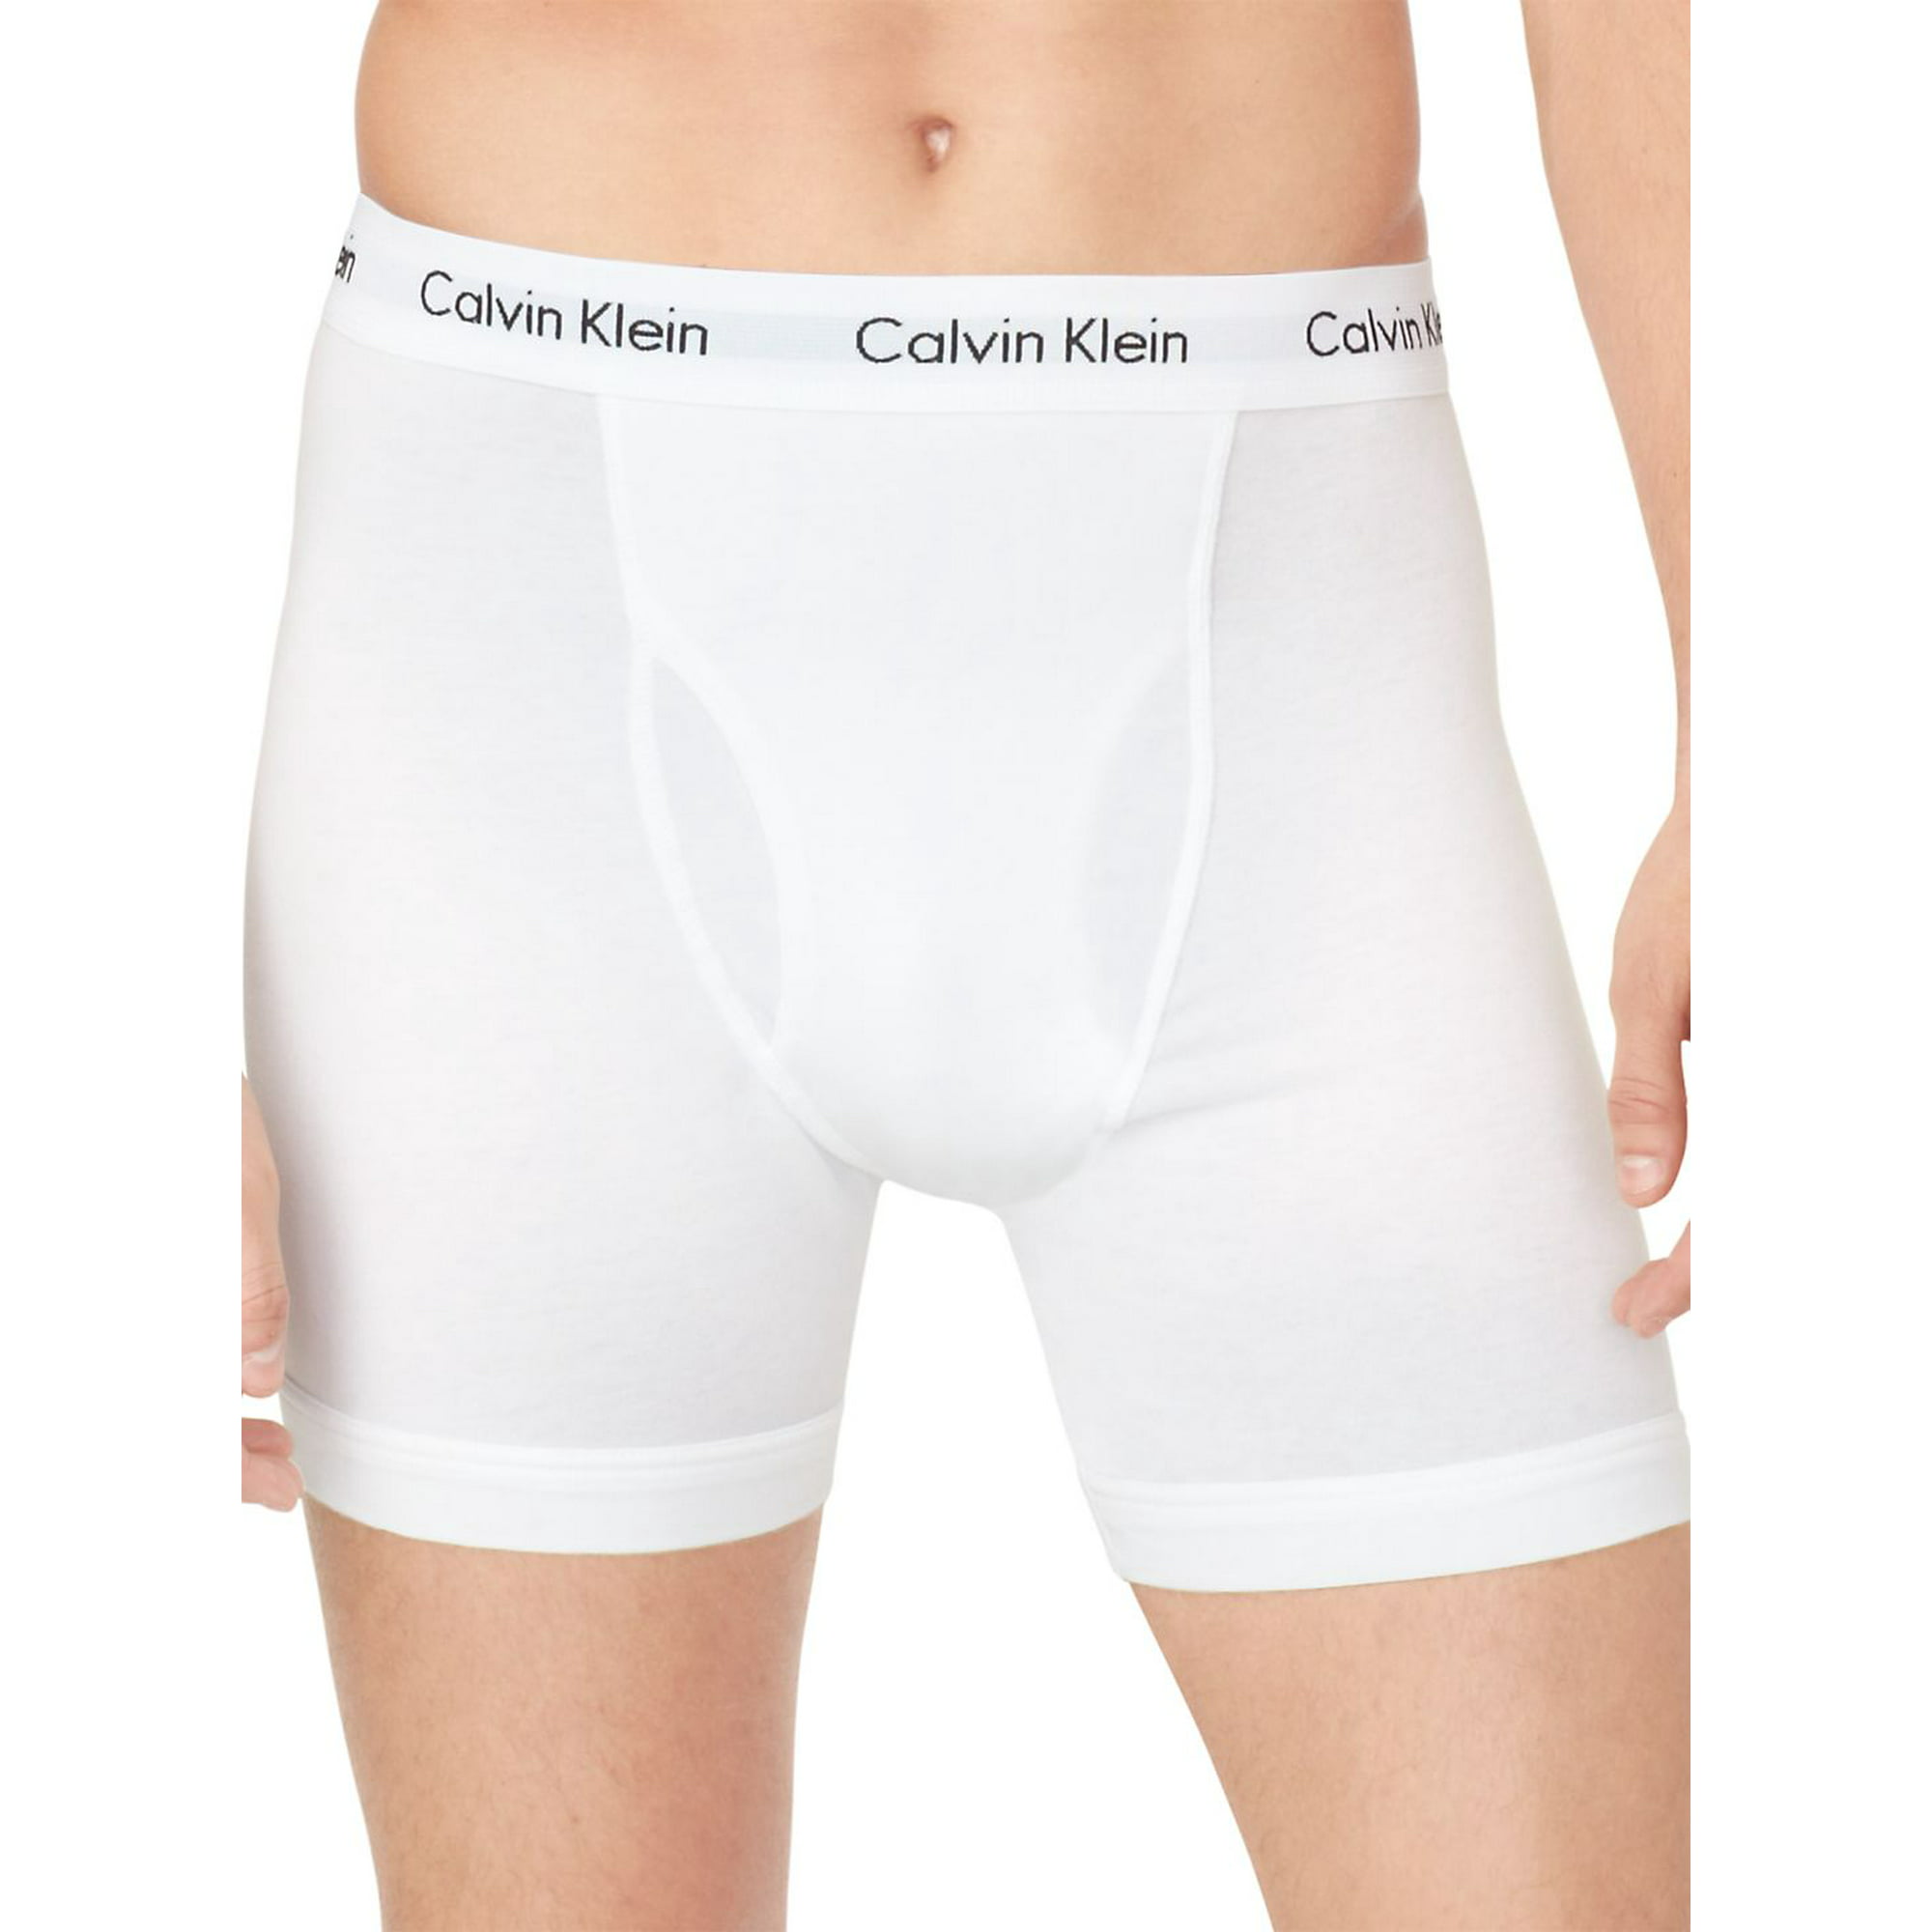 Calvin Klein Men's Cotton Stretch Multipack Boxer Briefs, White, Large |  Walmart Canada